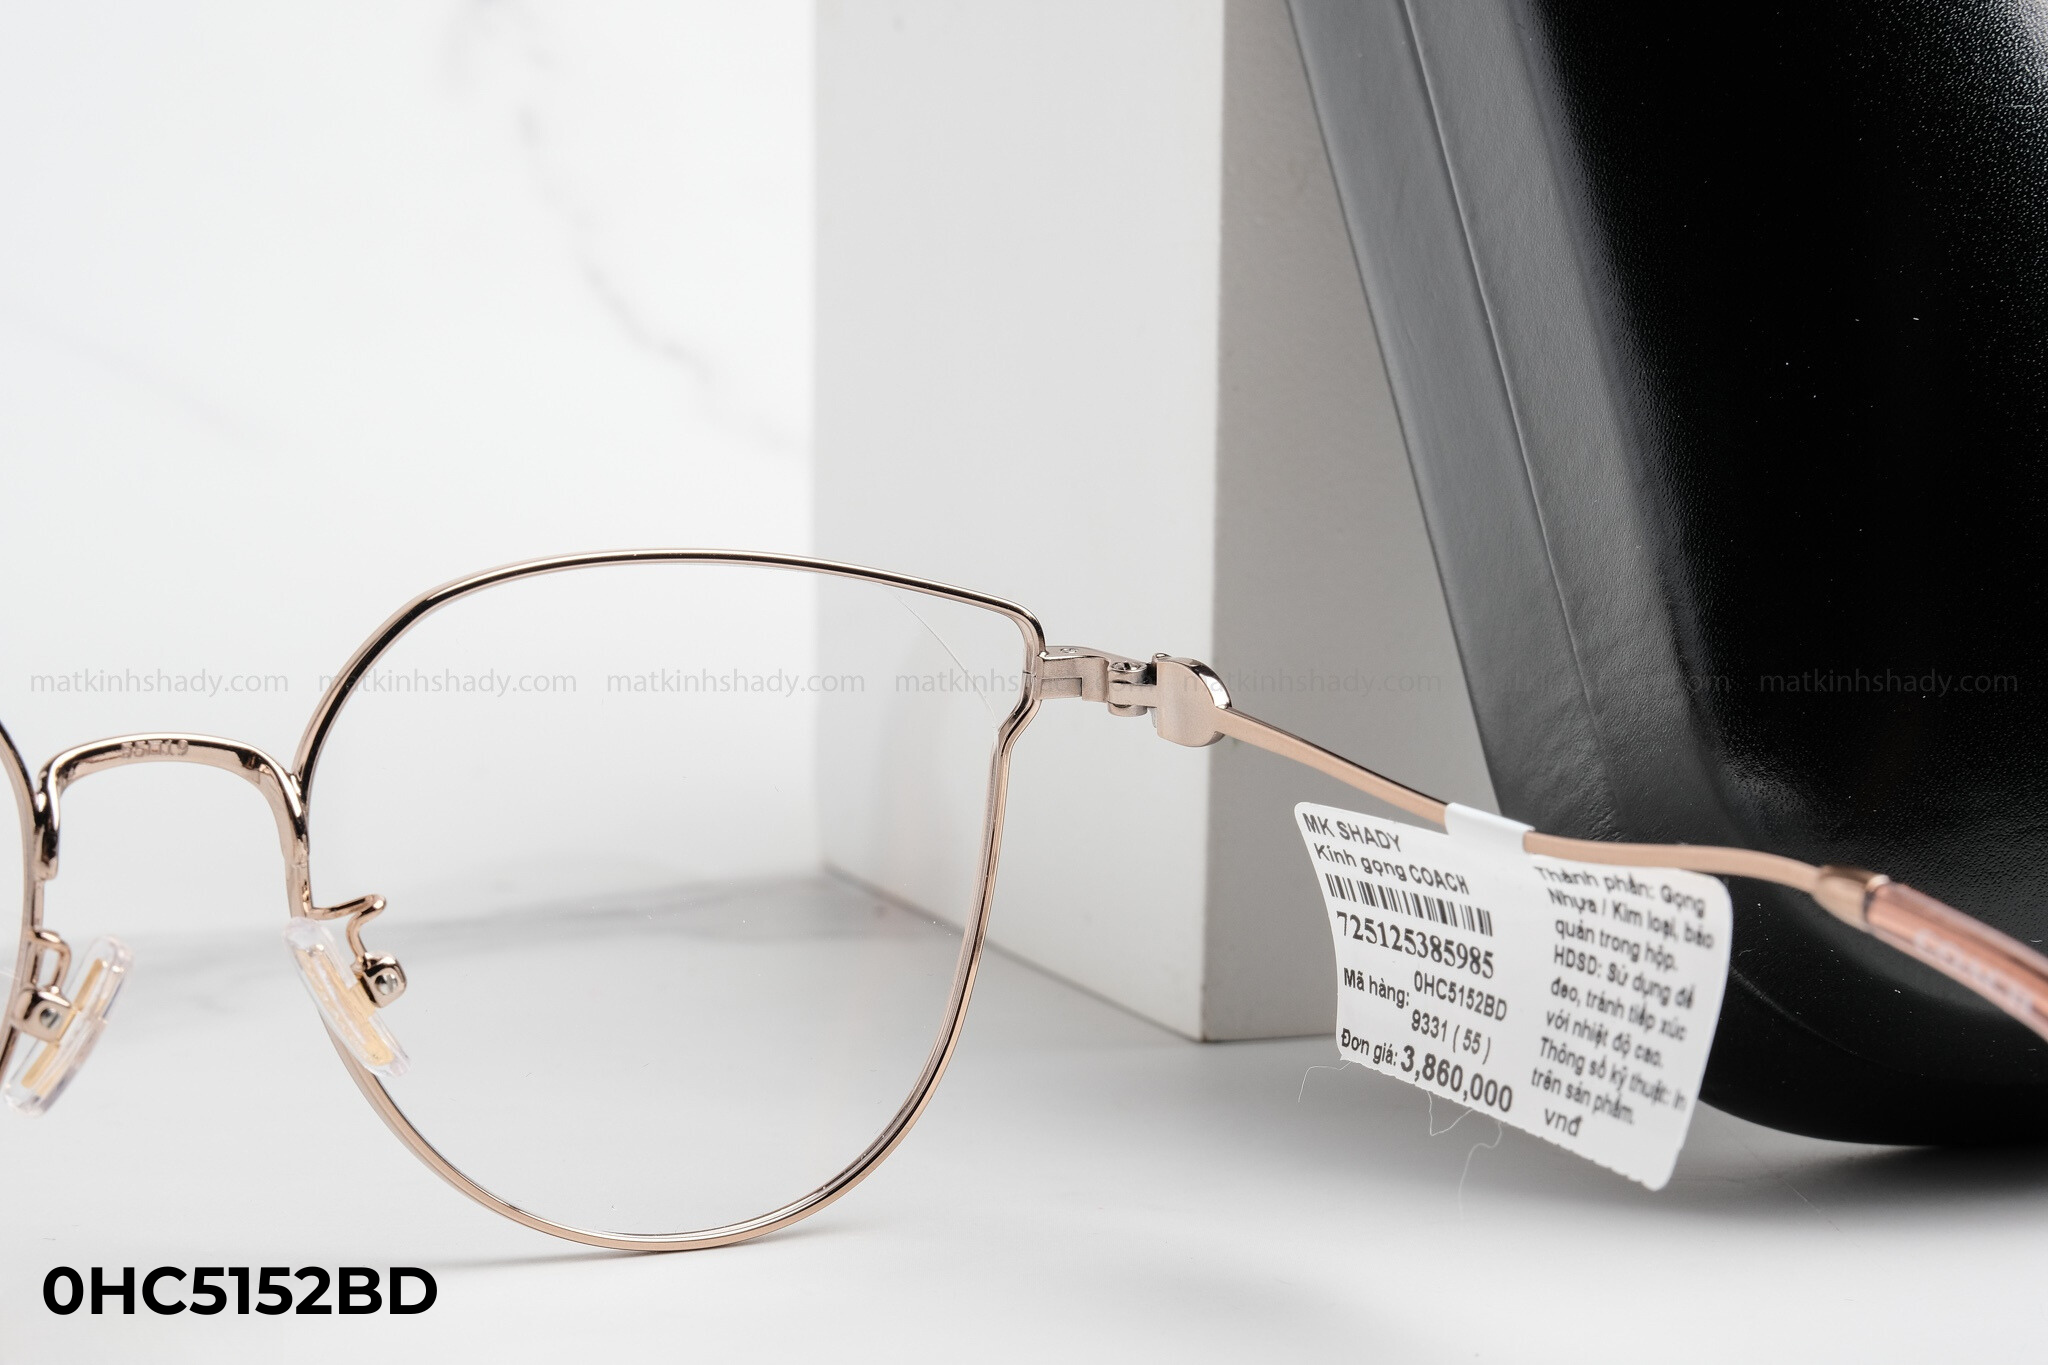  Coach Eyewear - Glasses - 0HC5152BD 